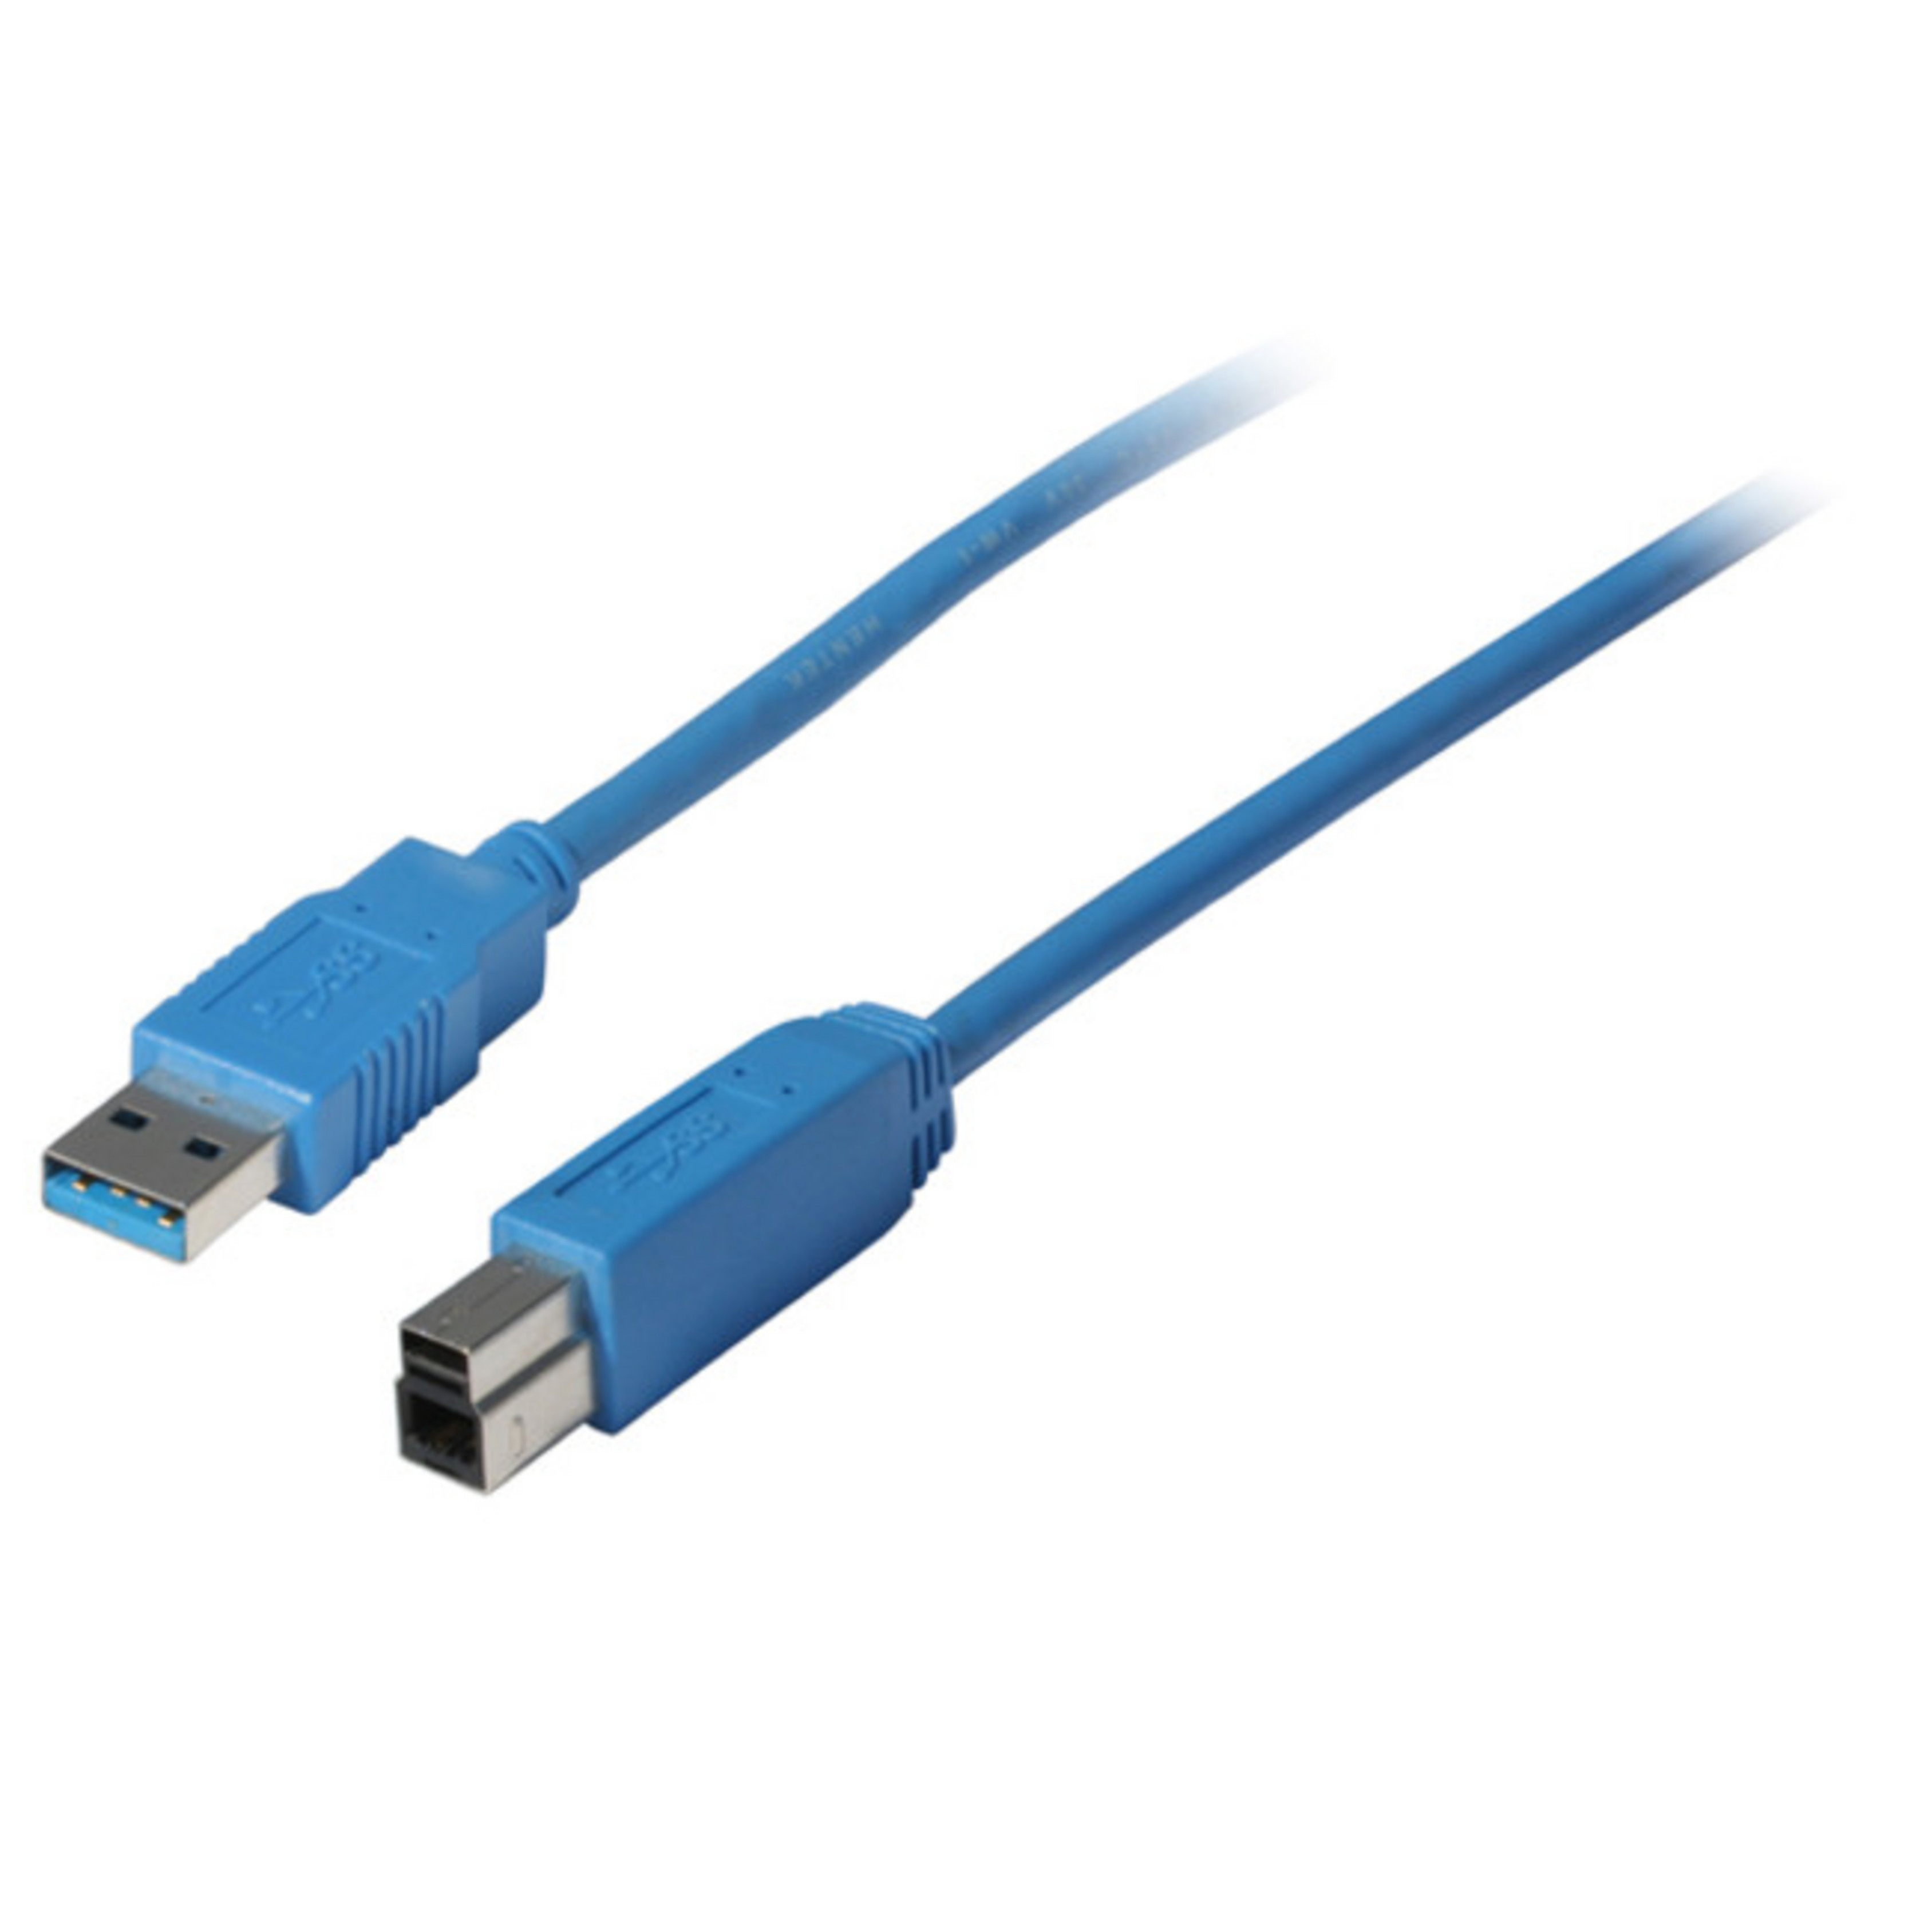 S/CONN MAXIMUM CONNECTIVITY USB Kabel Stecker / Kabel blau A Stecker 1m USB 3.0 B USB